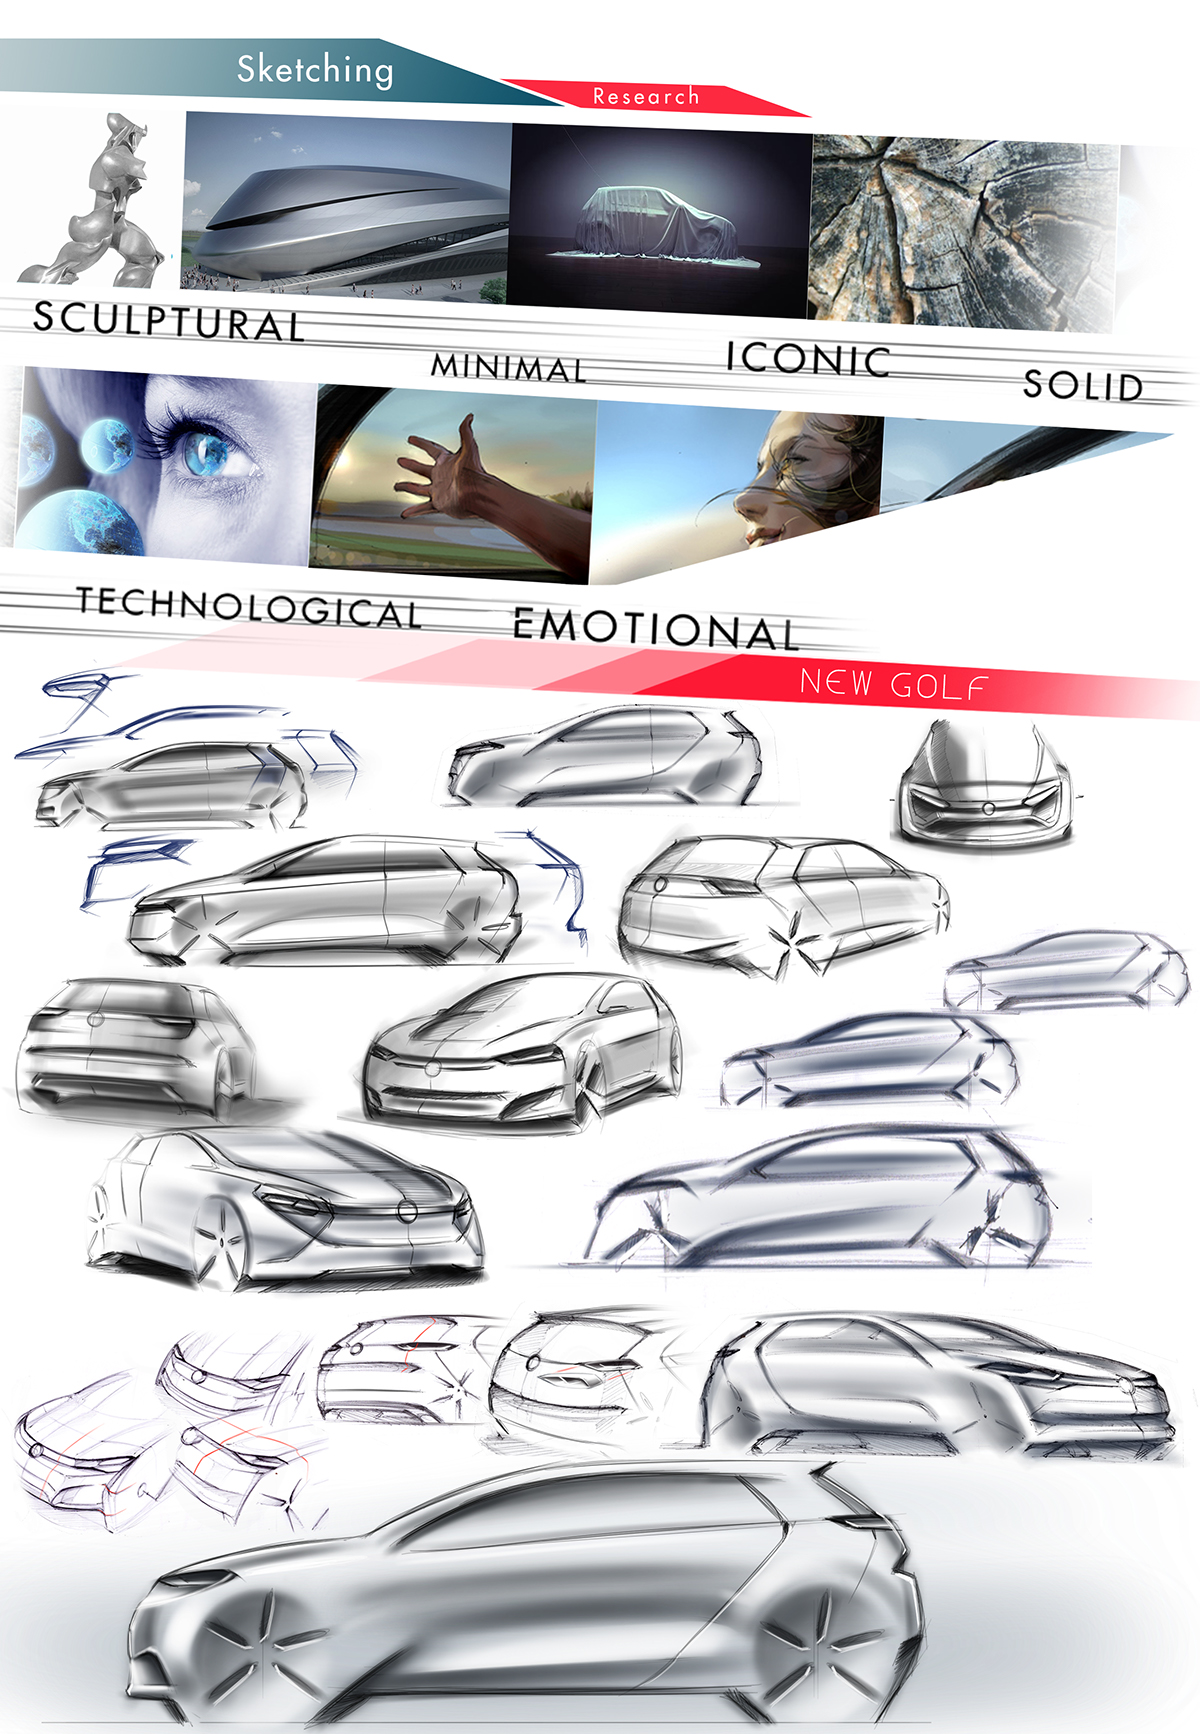 GOLF VISION 2020 volkswagen golf car design concept car vision automotive   design Golf VIII